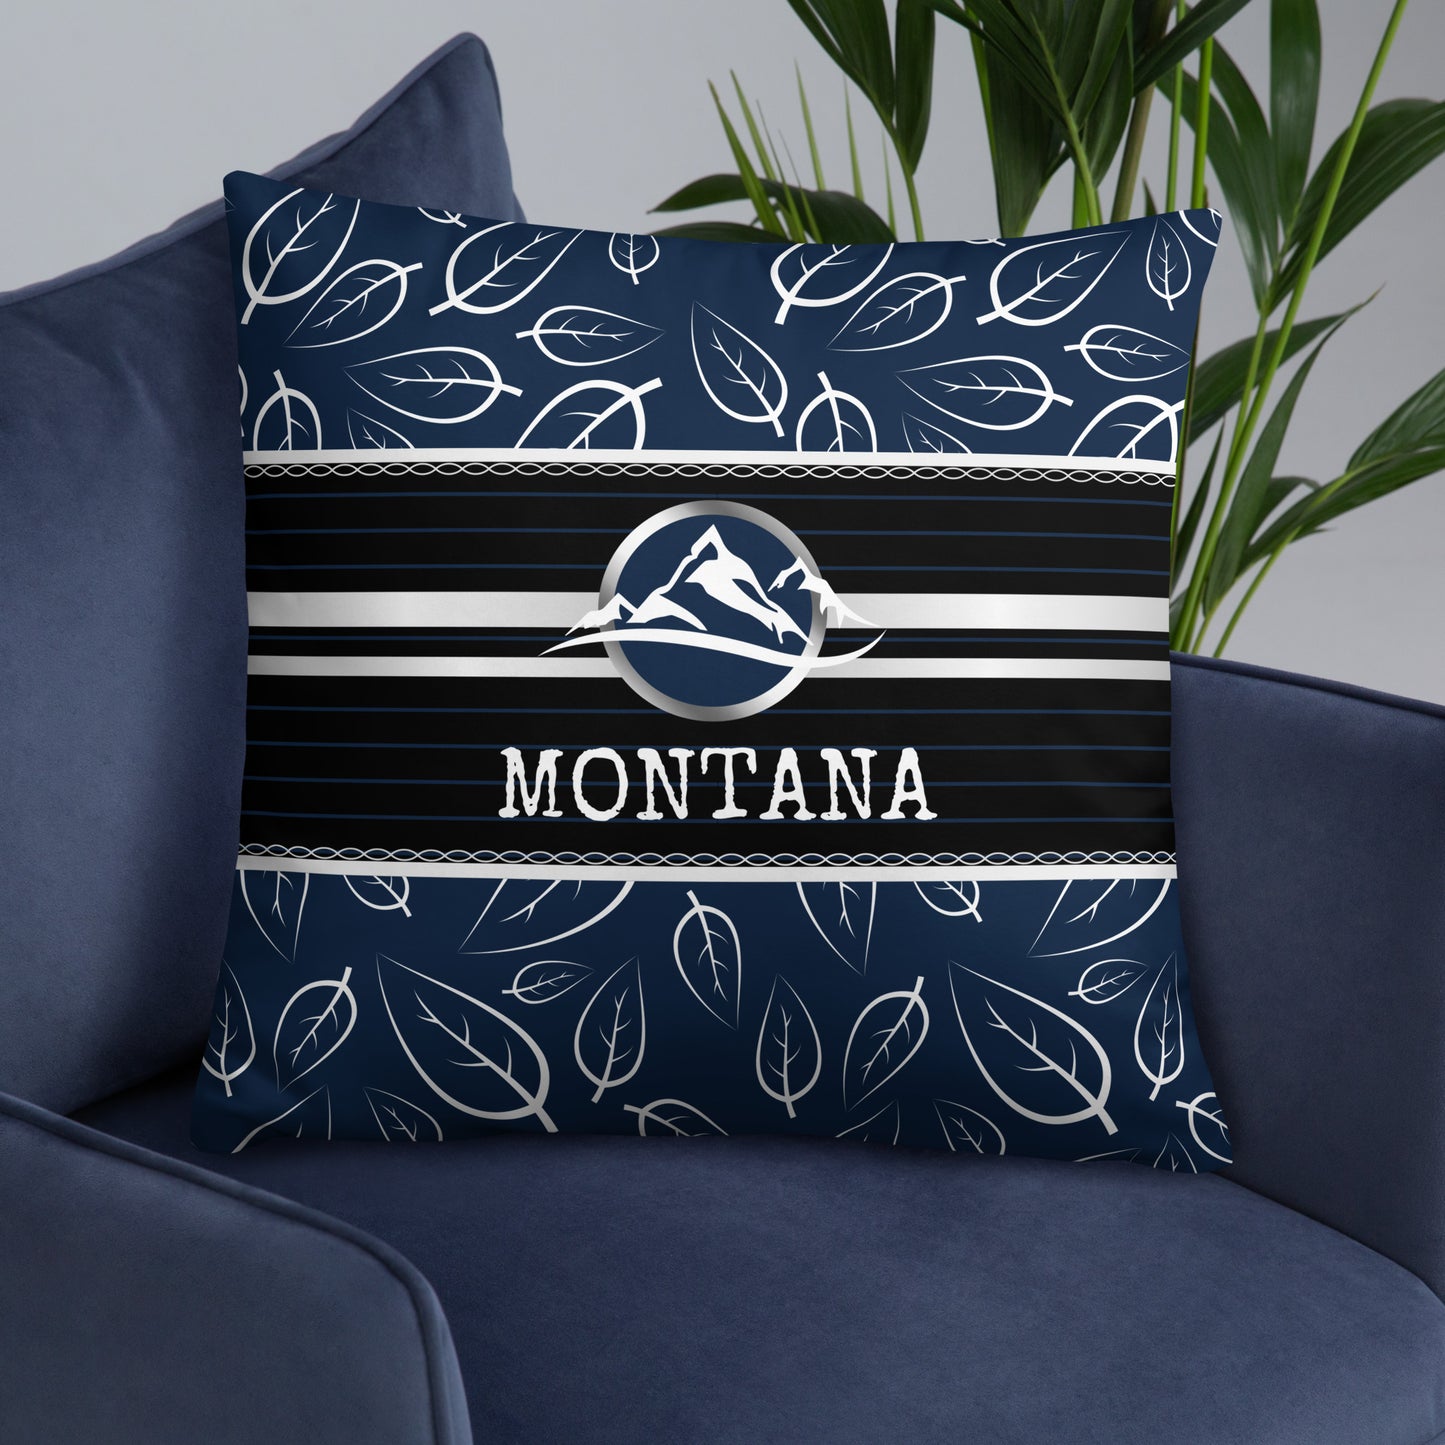 Montana Travel Gift | Montana Vacation Gift | Montana Travel Souvenir | Montana Vacation Memento | Montana Home Décor | Keepsake Souvenir Gift | Travel Vacation Gift | Montana United States Gift